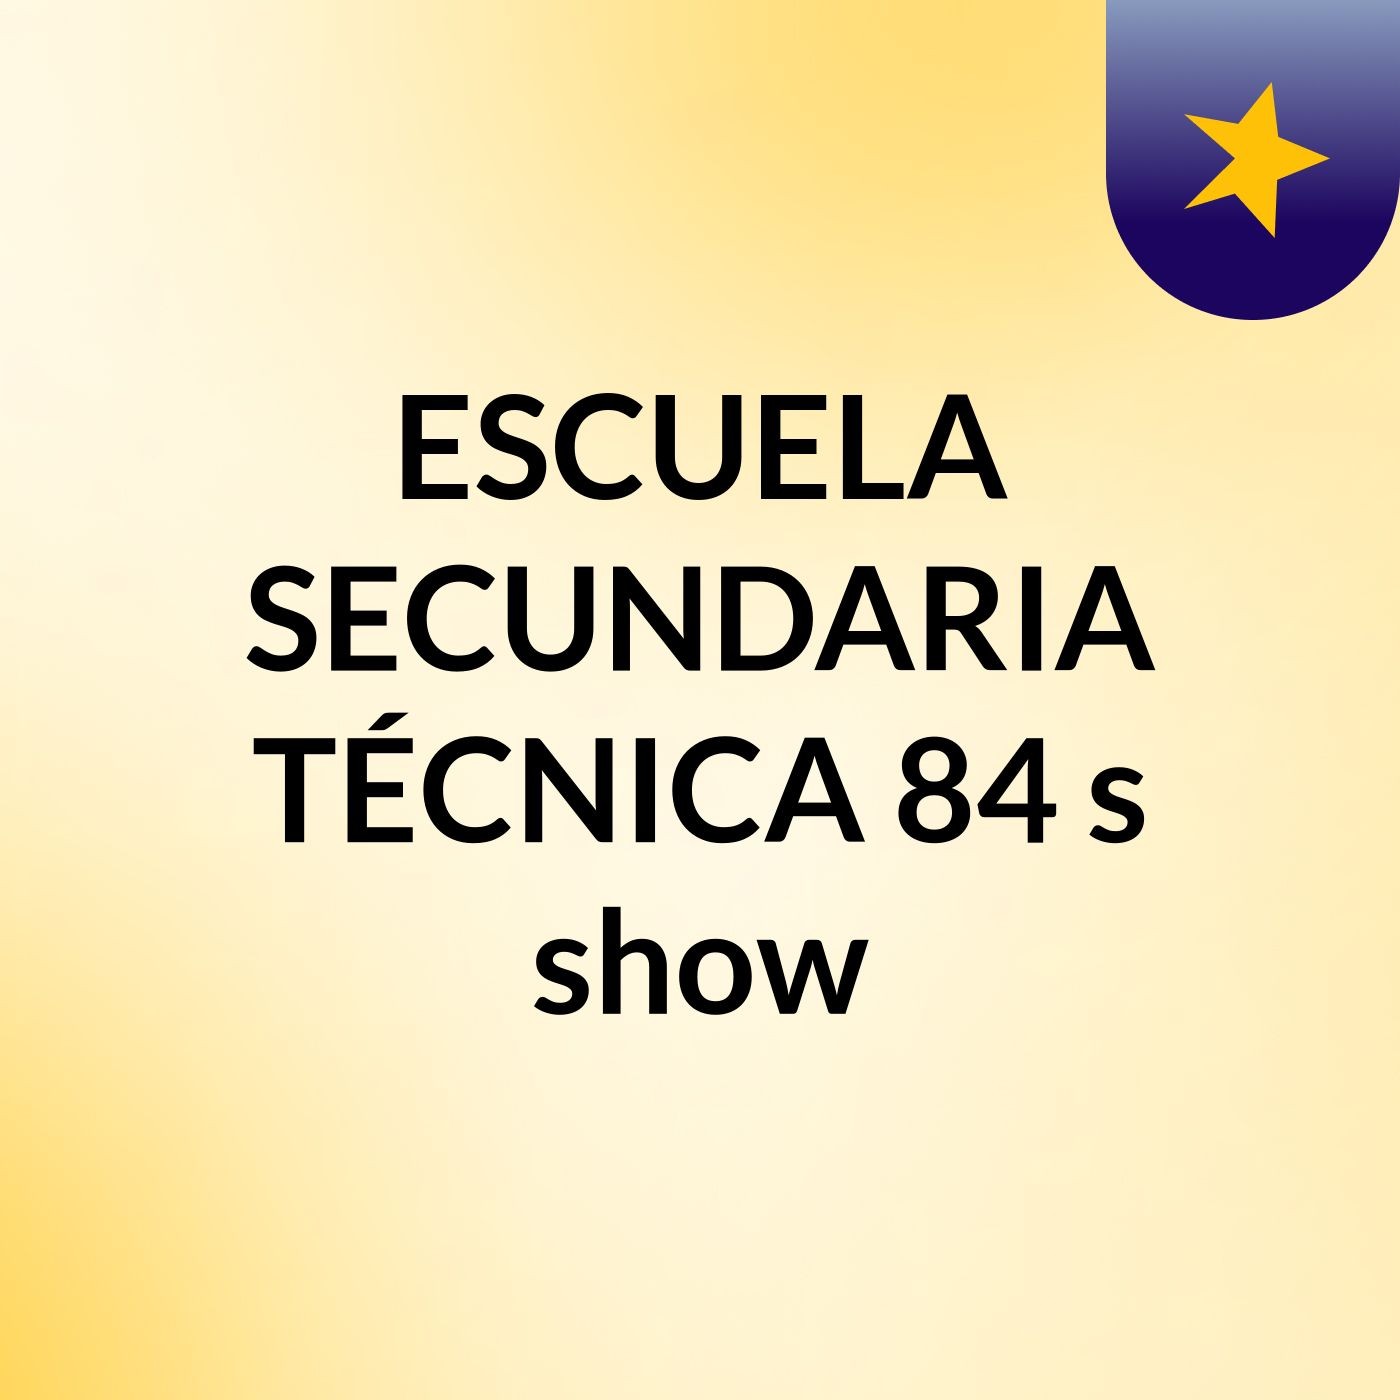 ESCUELA SECUNDARIA TÉCNICA 84's show